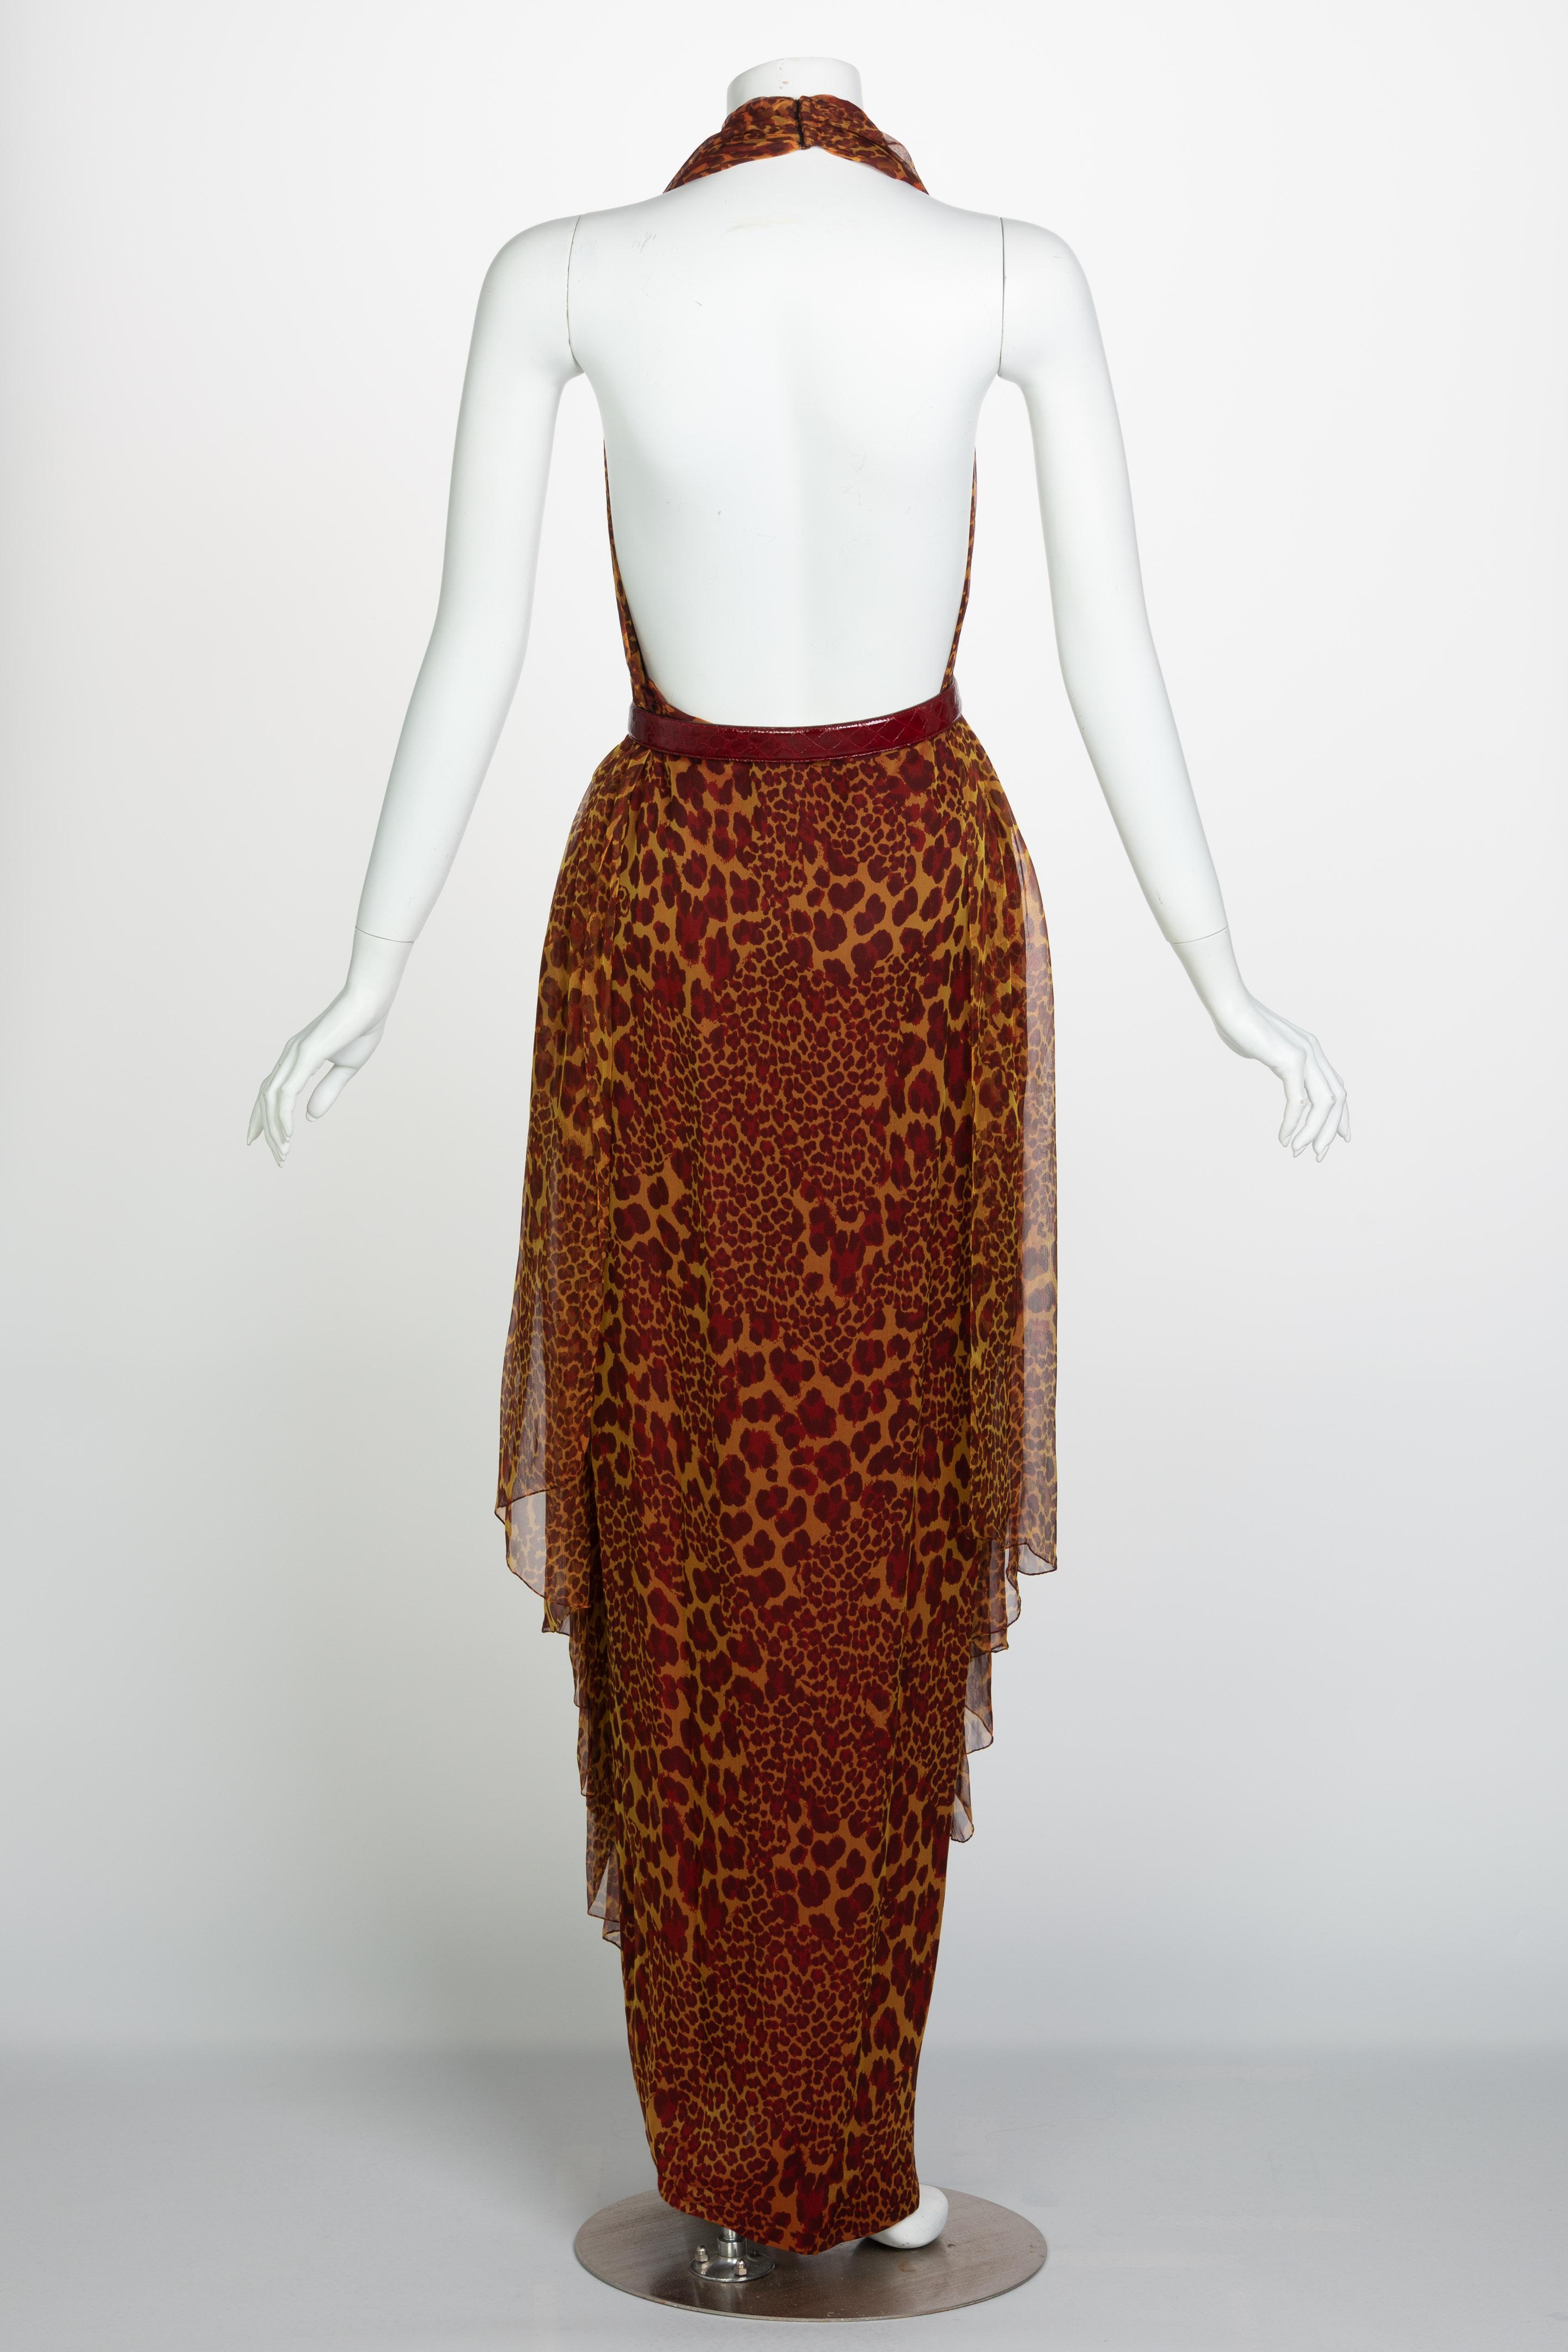 Women's James Galanos Couture Chiffon Cheetah Print Open Back Halter Dress, 1980s